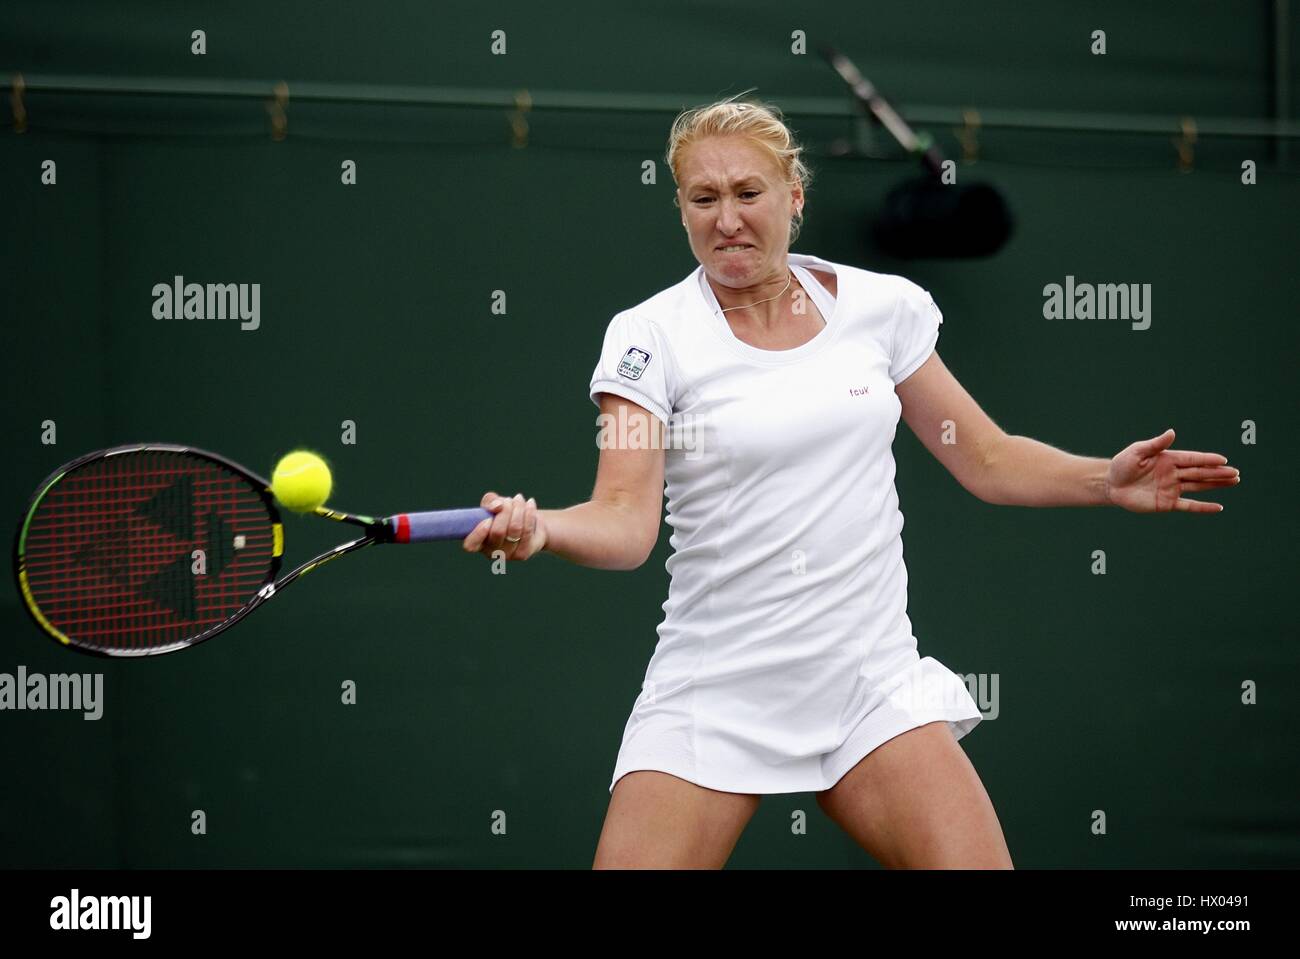 Elena baltacha tennis hi-res stock photography and images - Alamy